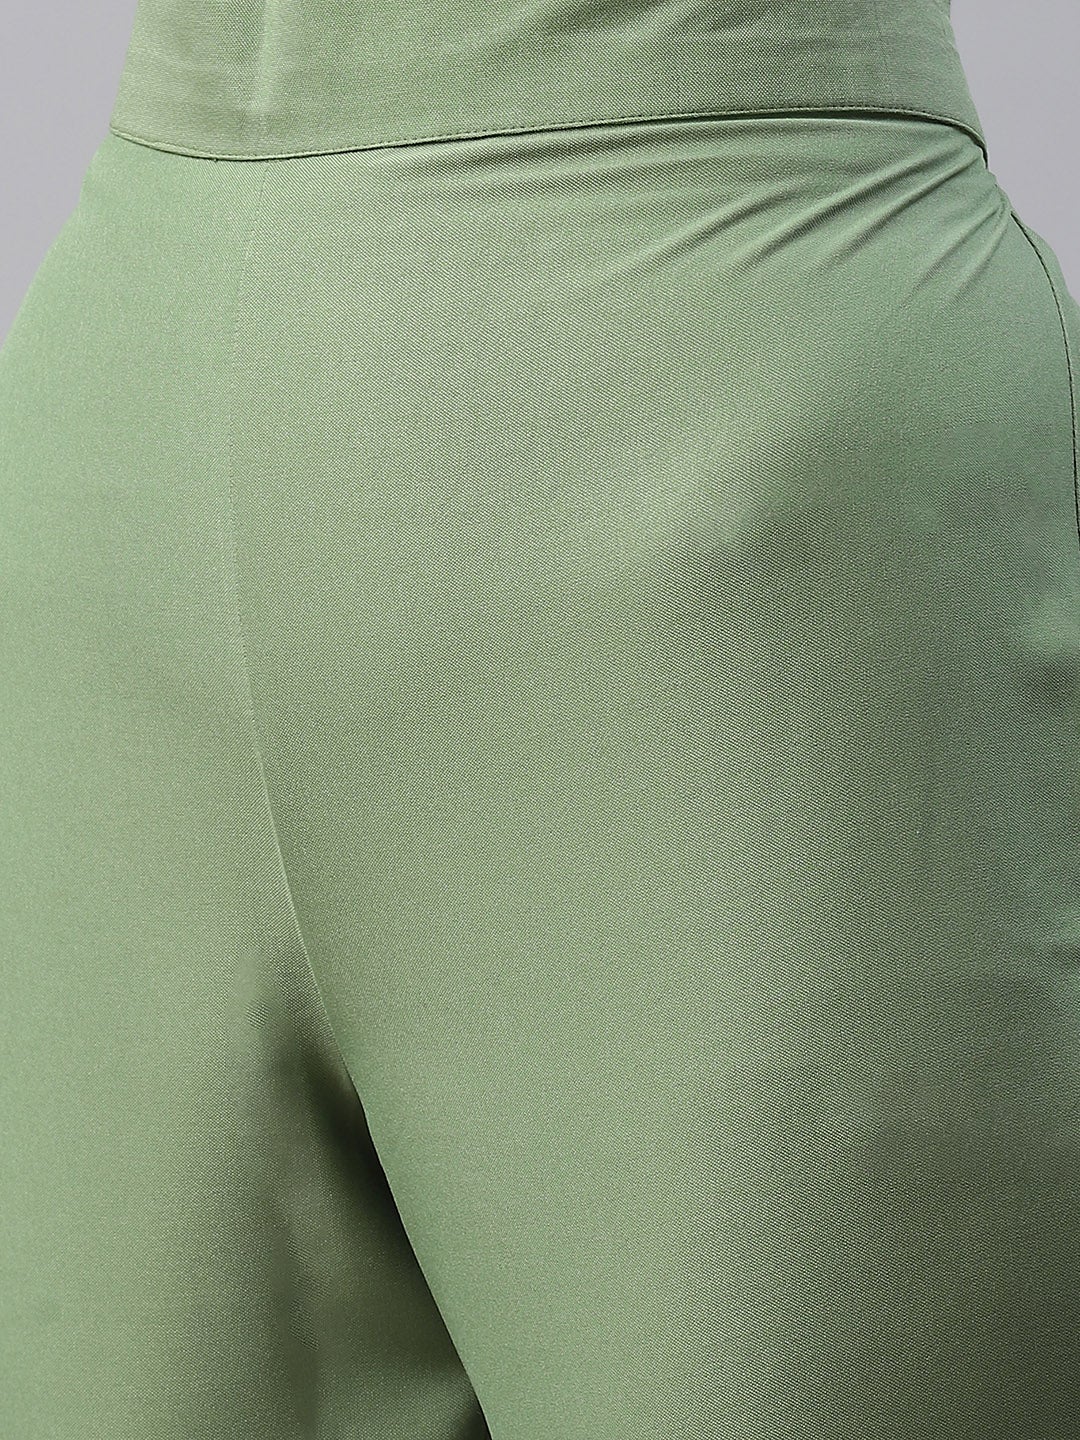 Mindhal Women's Green Color Digital Printed Straight Kurta,Pant And Dupatta Set